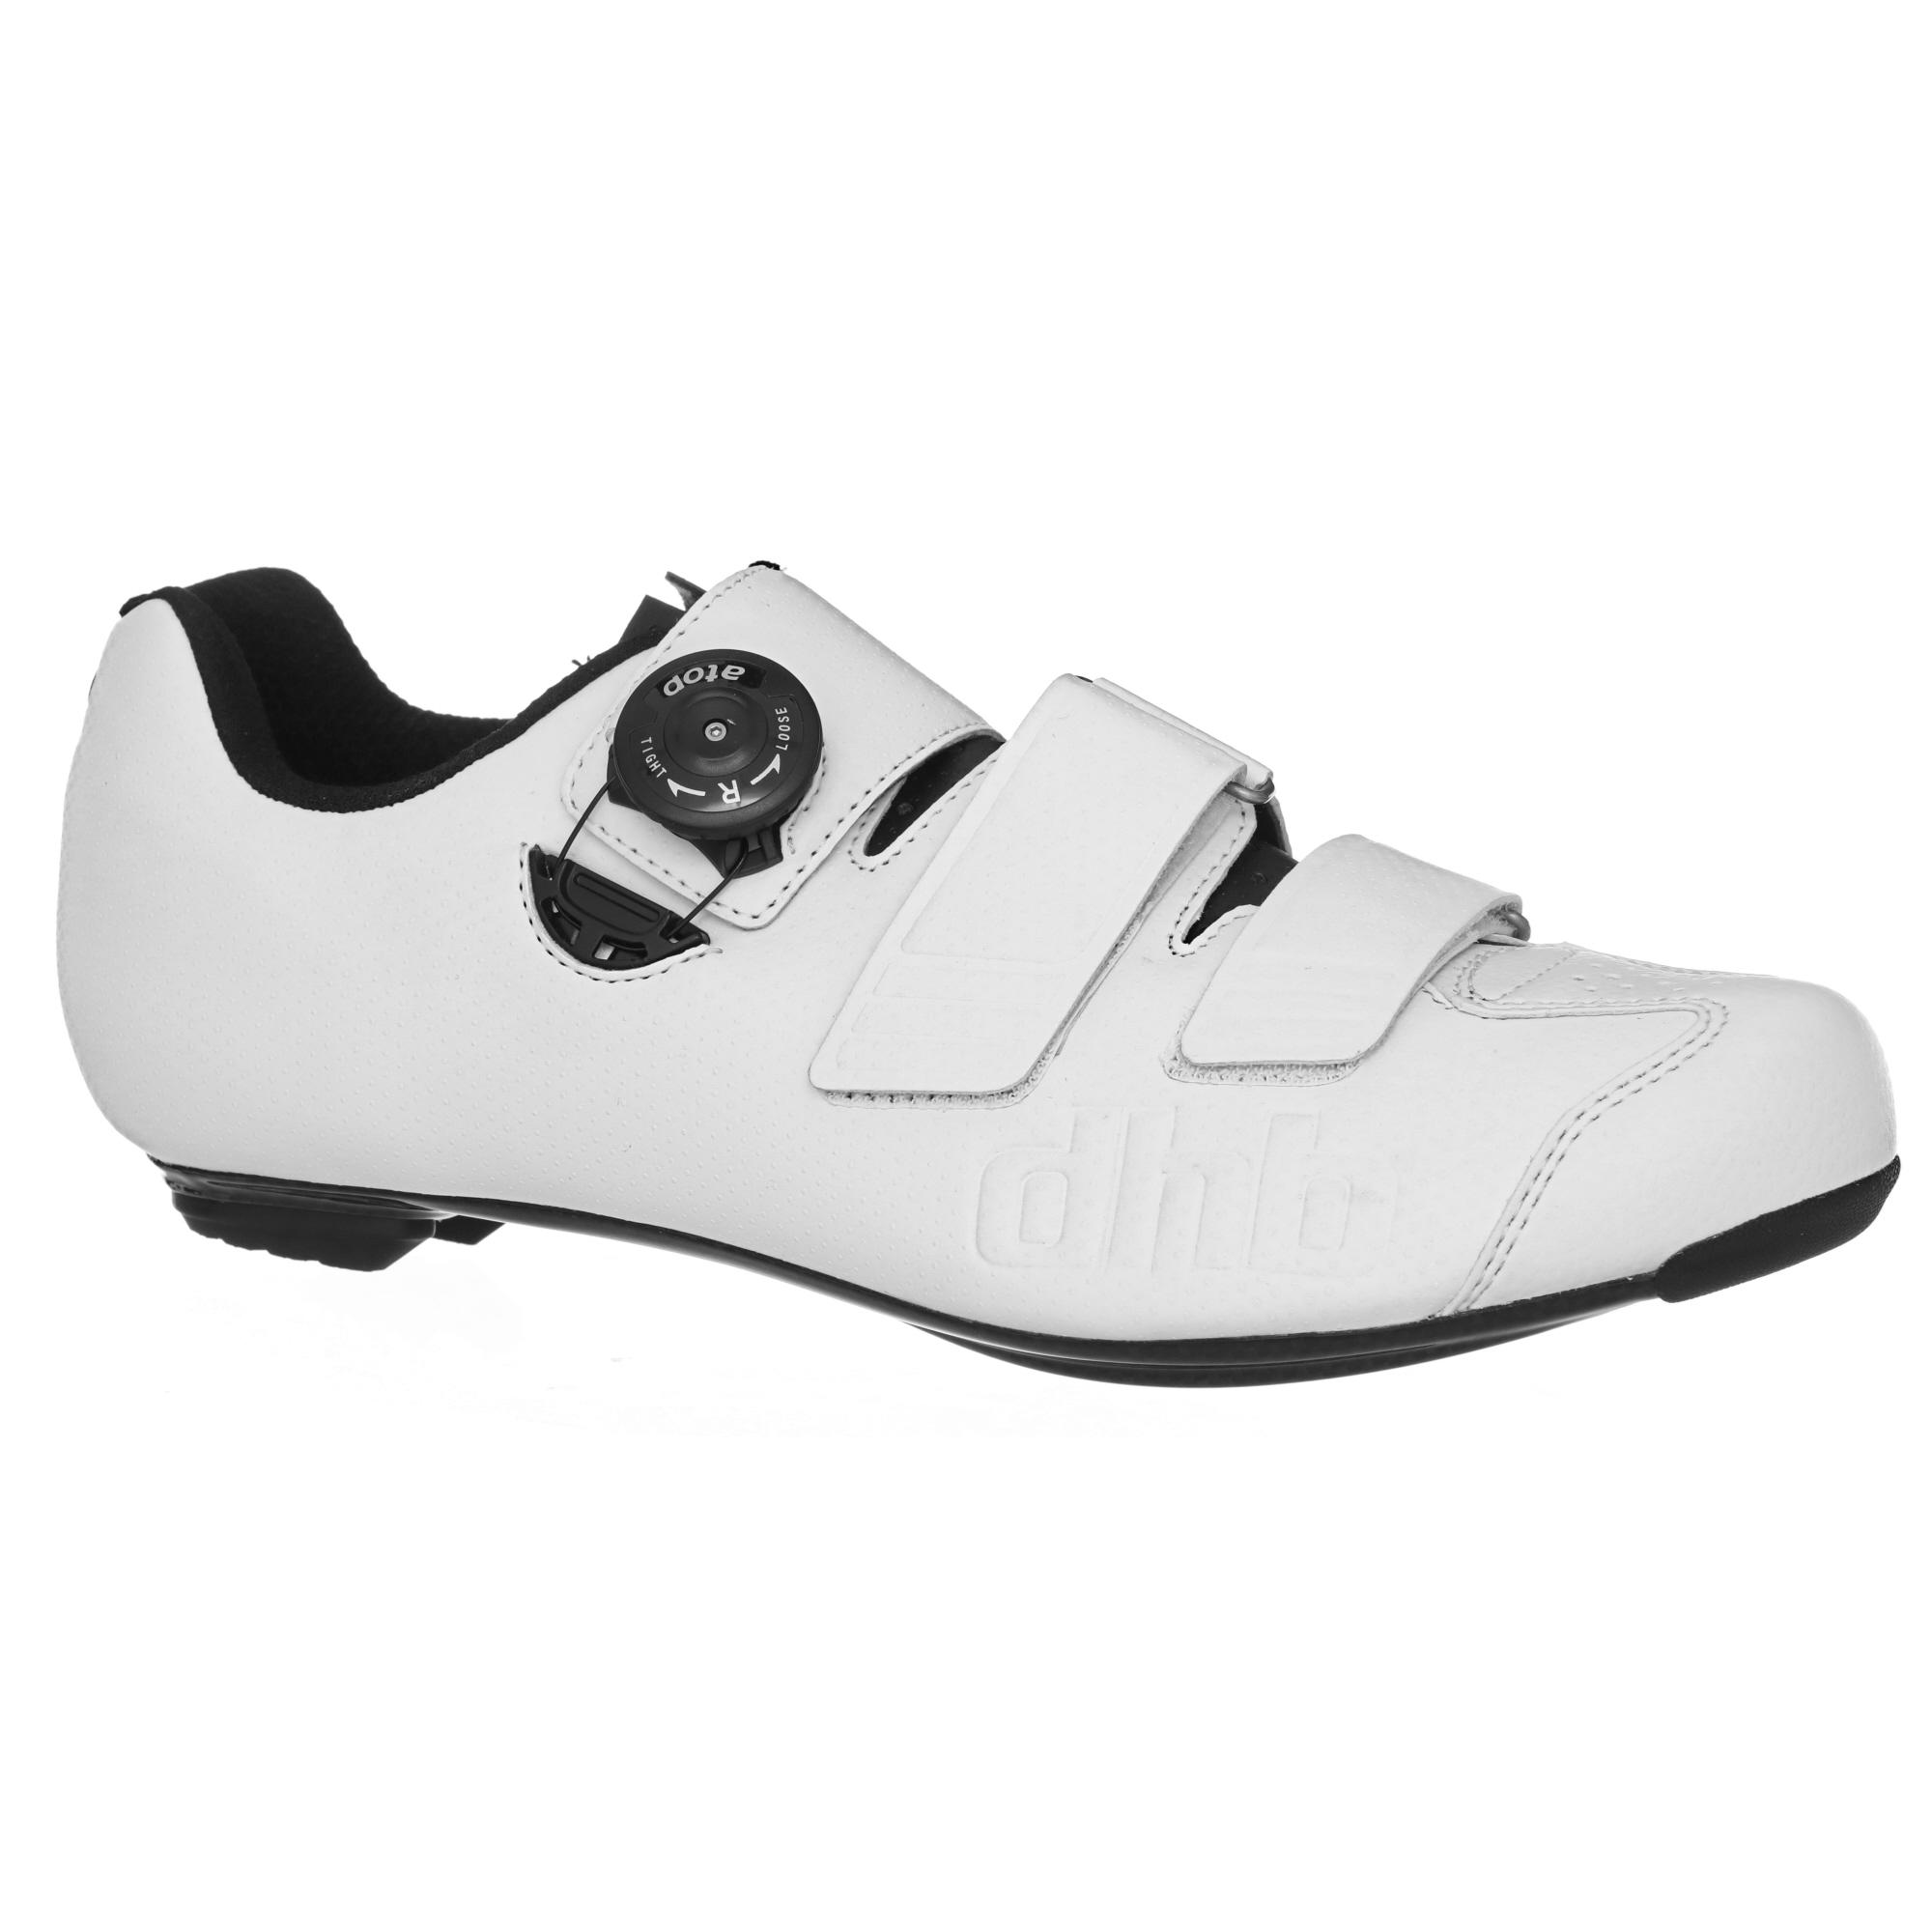 Dhb Aeron Carbon Road Shoe Dial - White